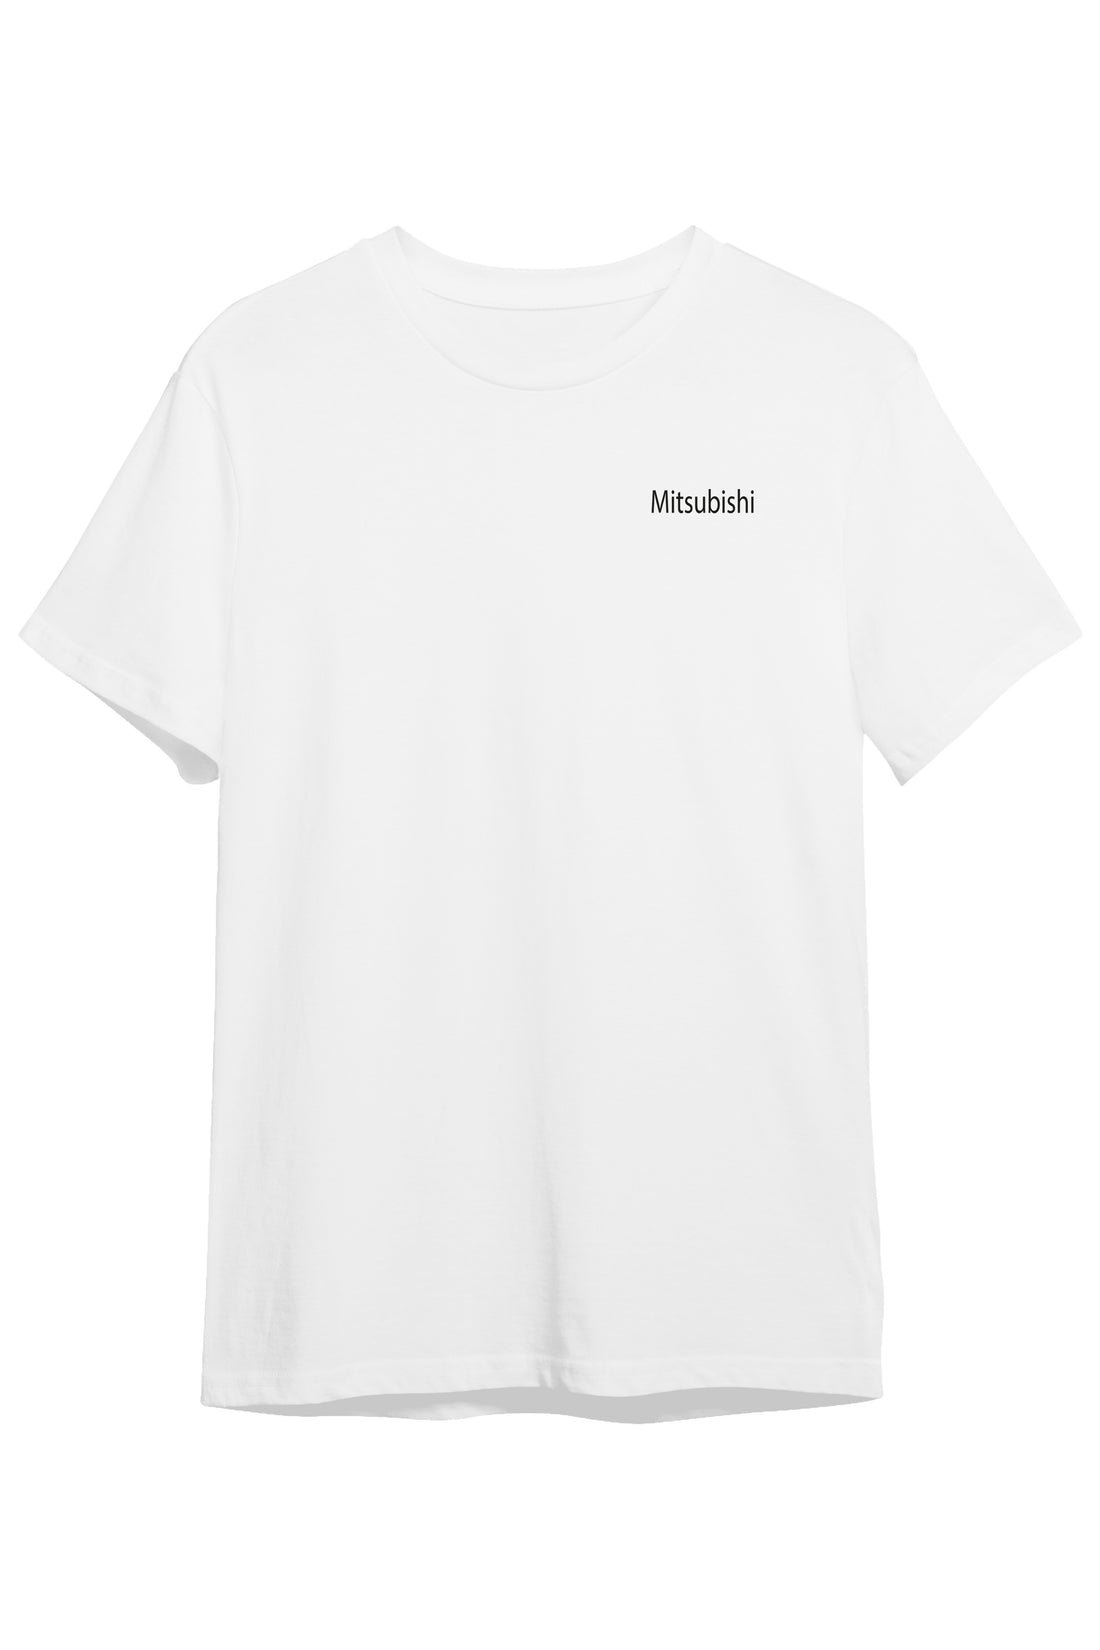 Mitsubishi - Regular Tshirt